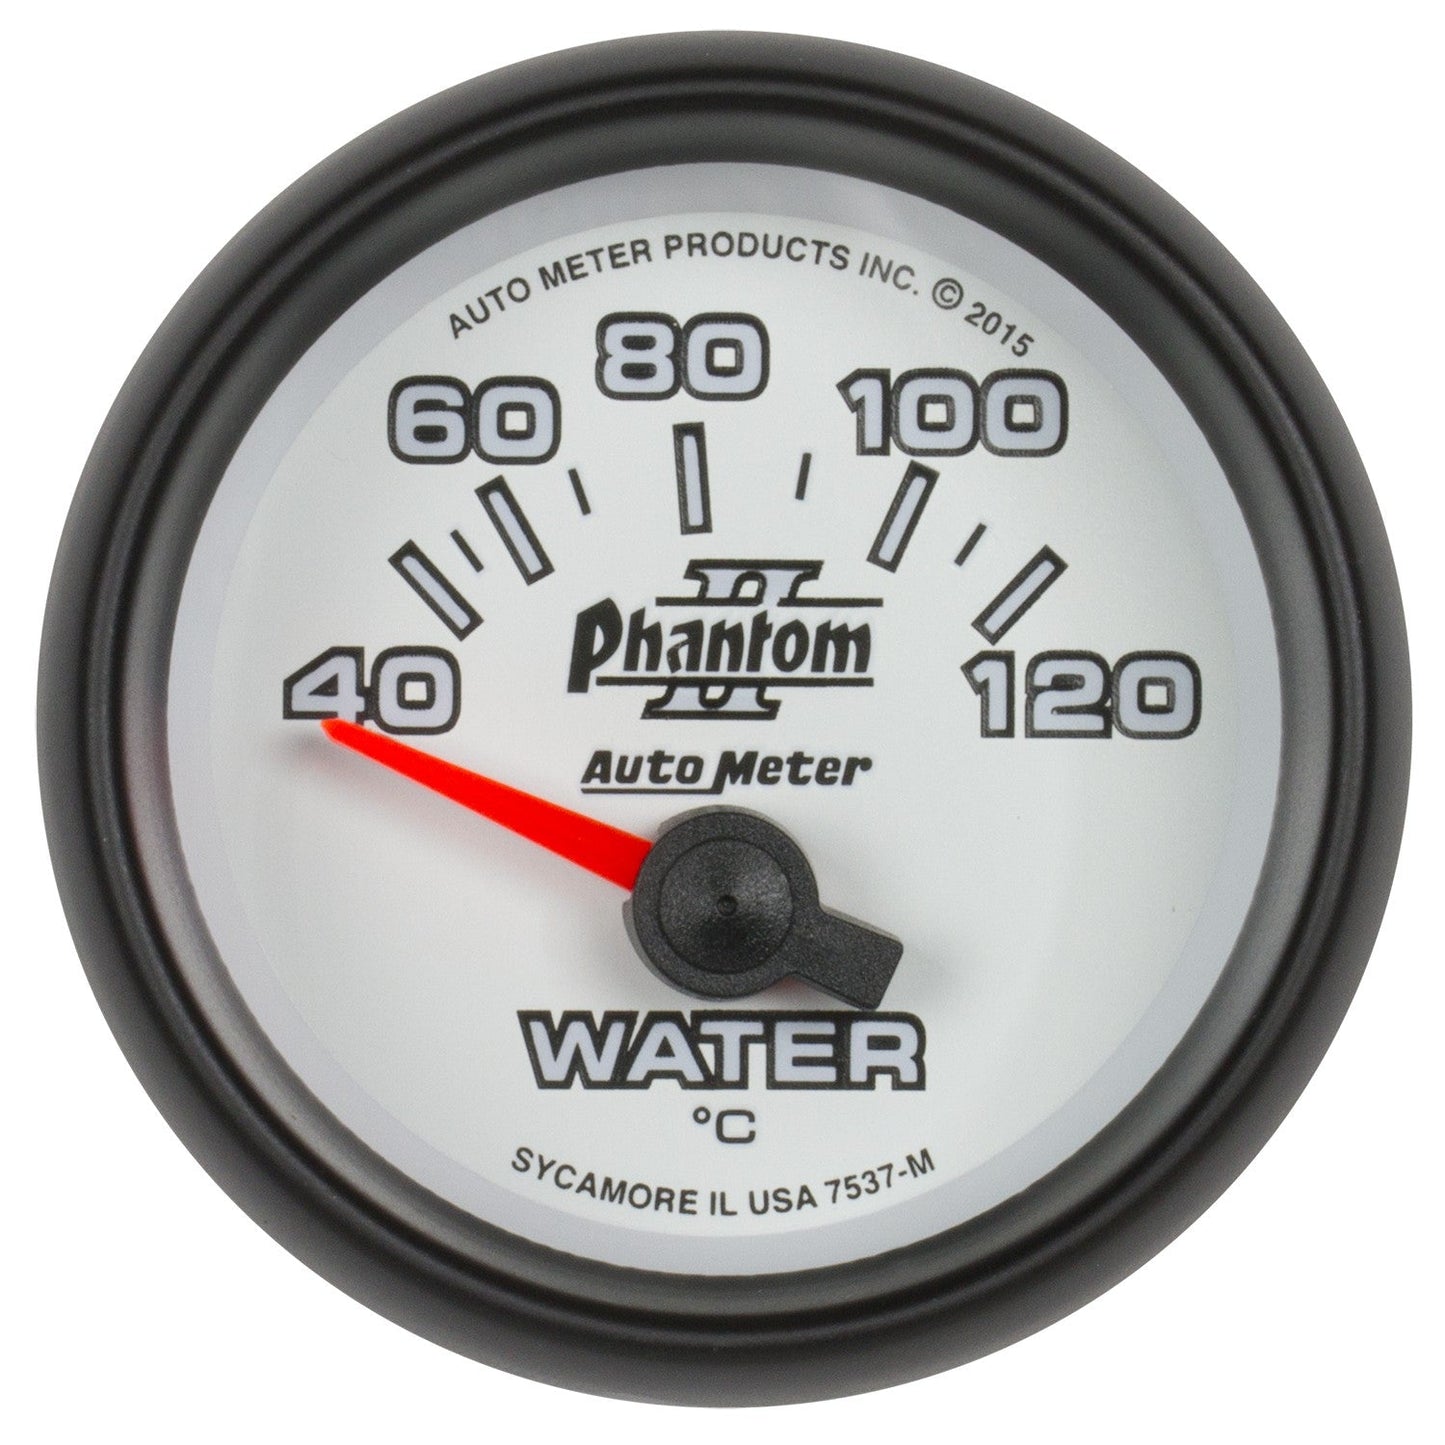 AutoMeter - 2-1/16" WATER TEMP, 40-120 C, AIR-CORE, PHANTOM II (7537-M)